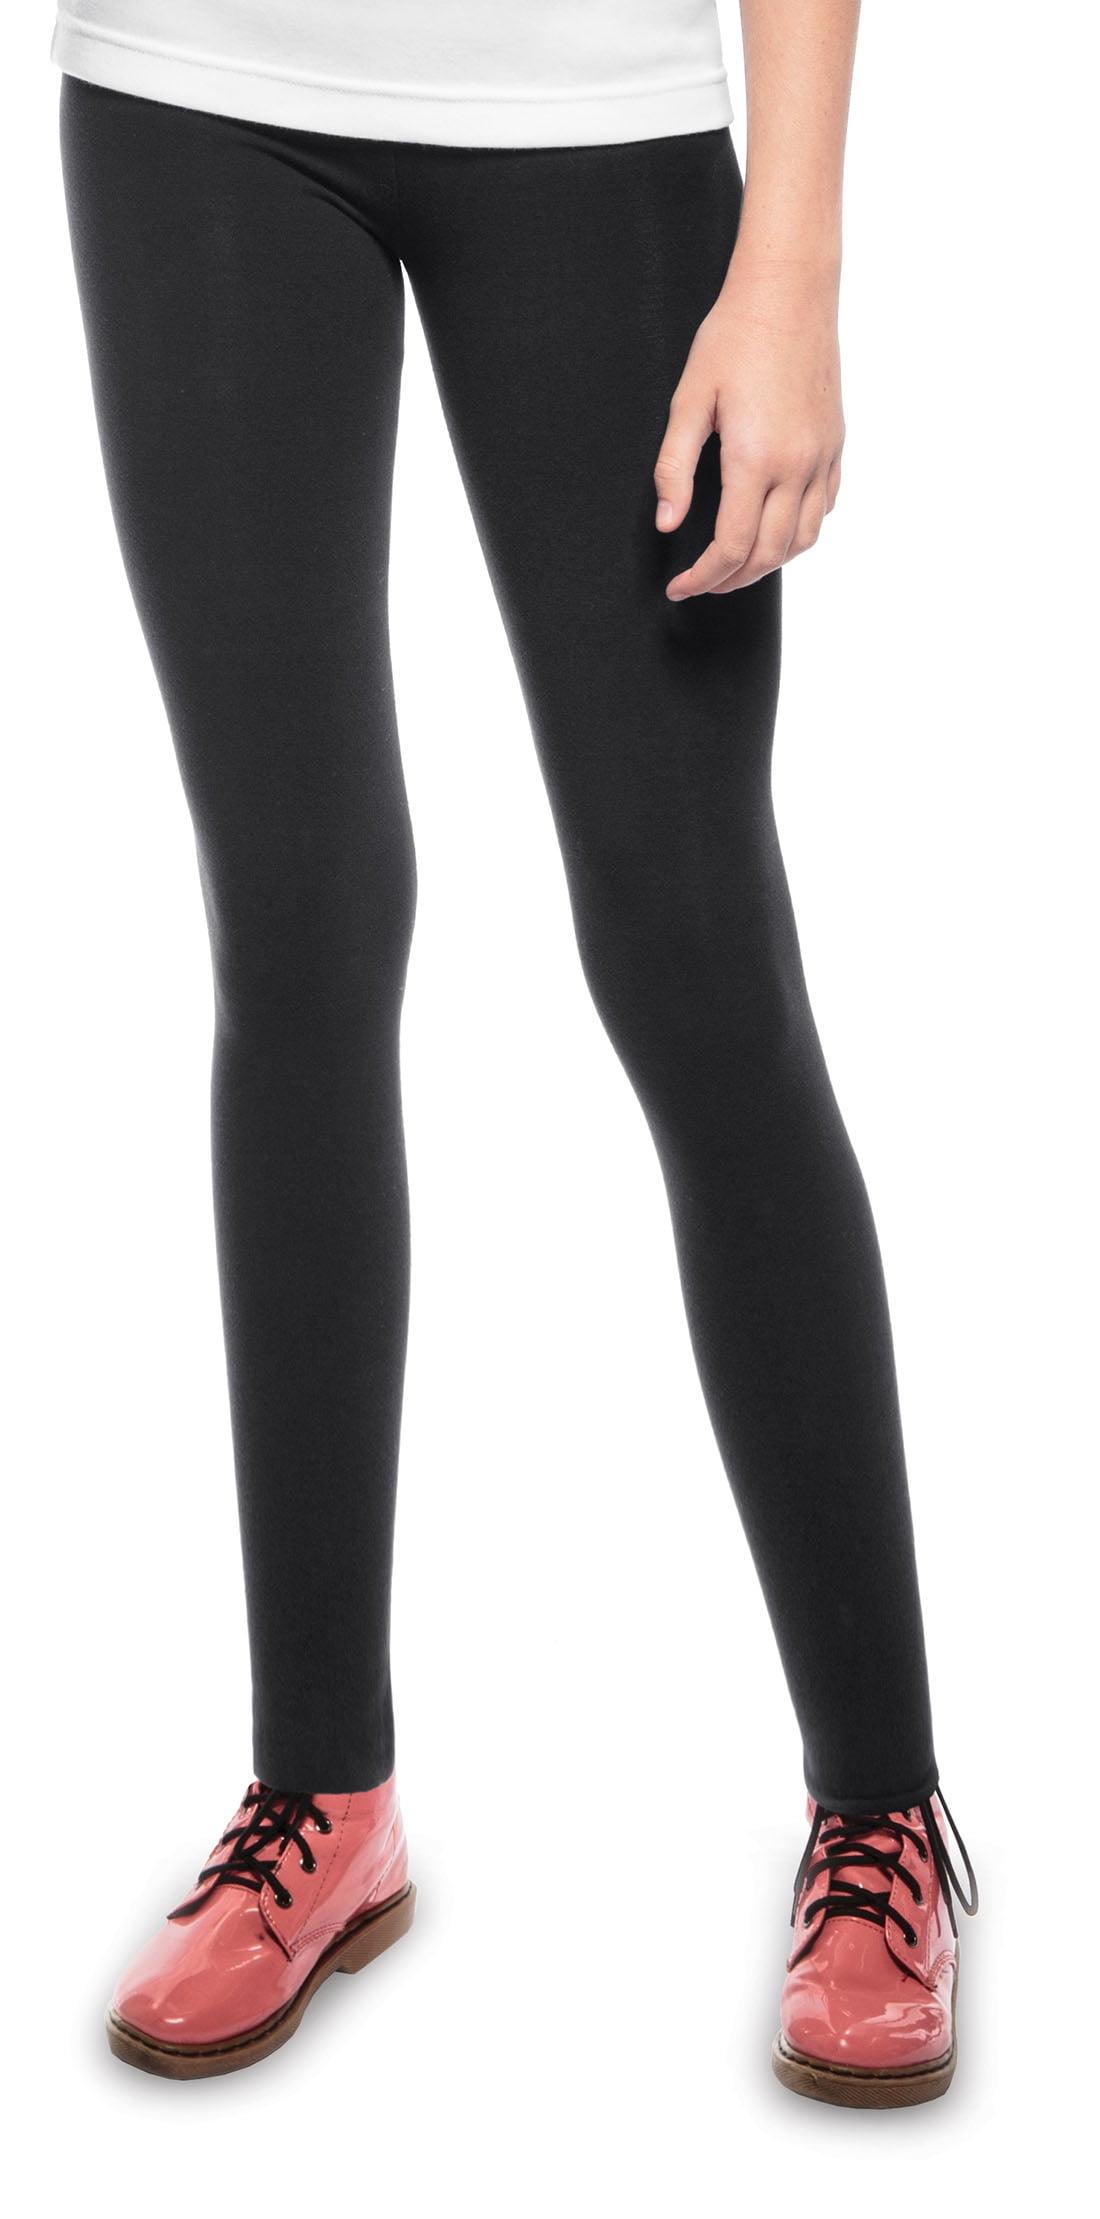 S-XL LeYue Womens Cute Mushroom Yoga Pants Performance Activewear Workout Leggings Sports Pants Size